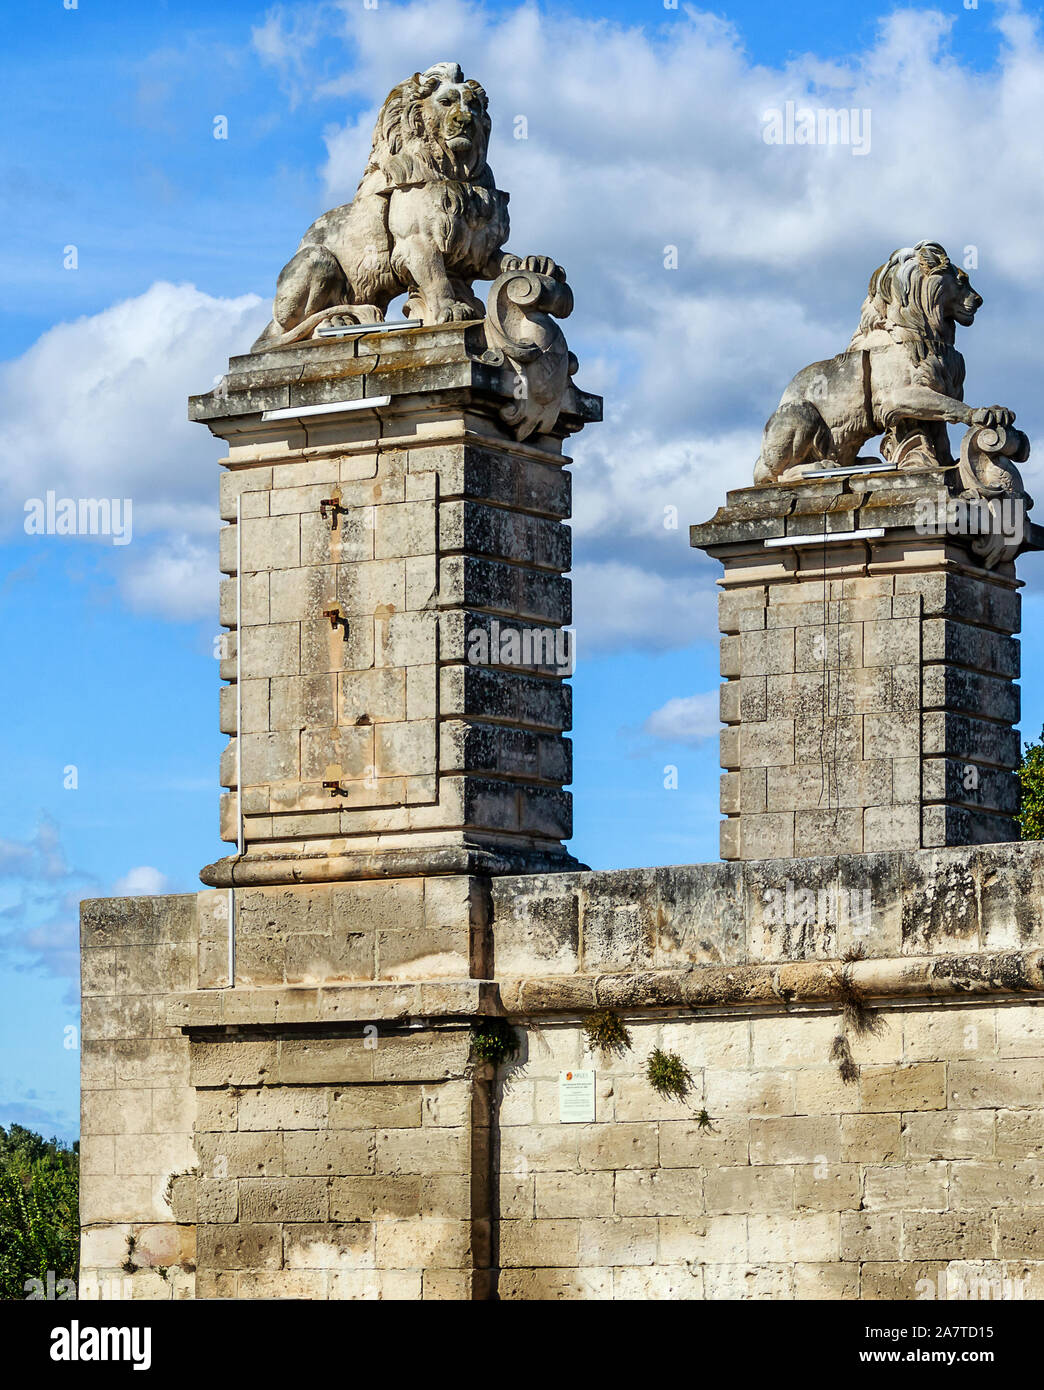 The Pont aux Lions or Pont de Lunel in Arles, France Stock Photo